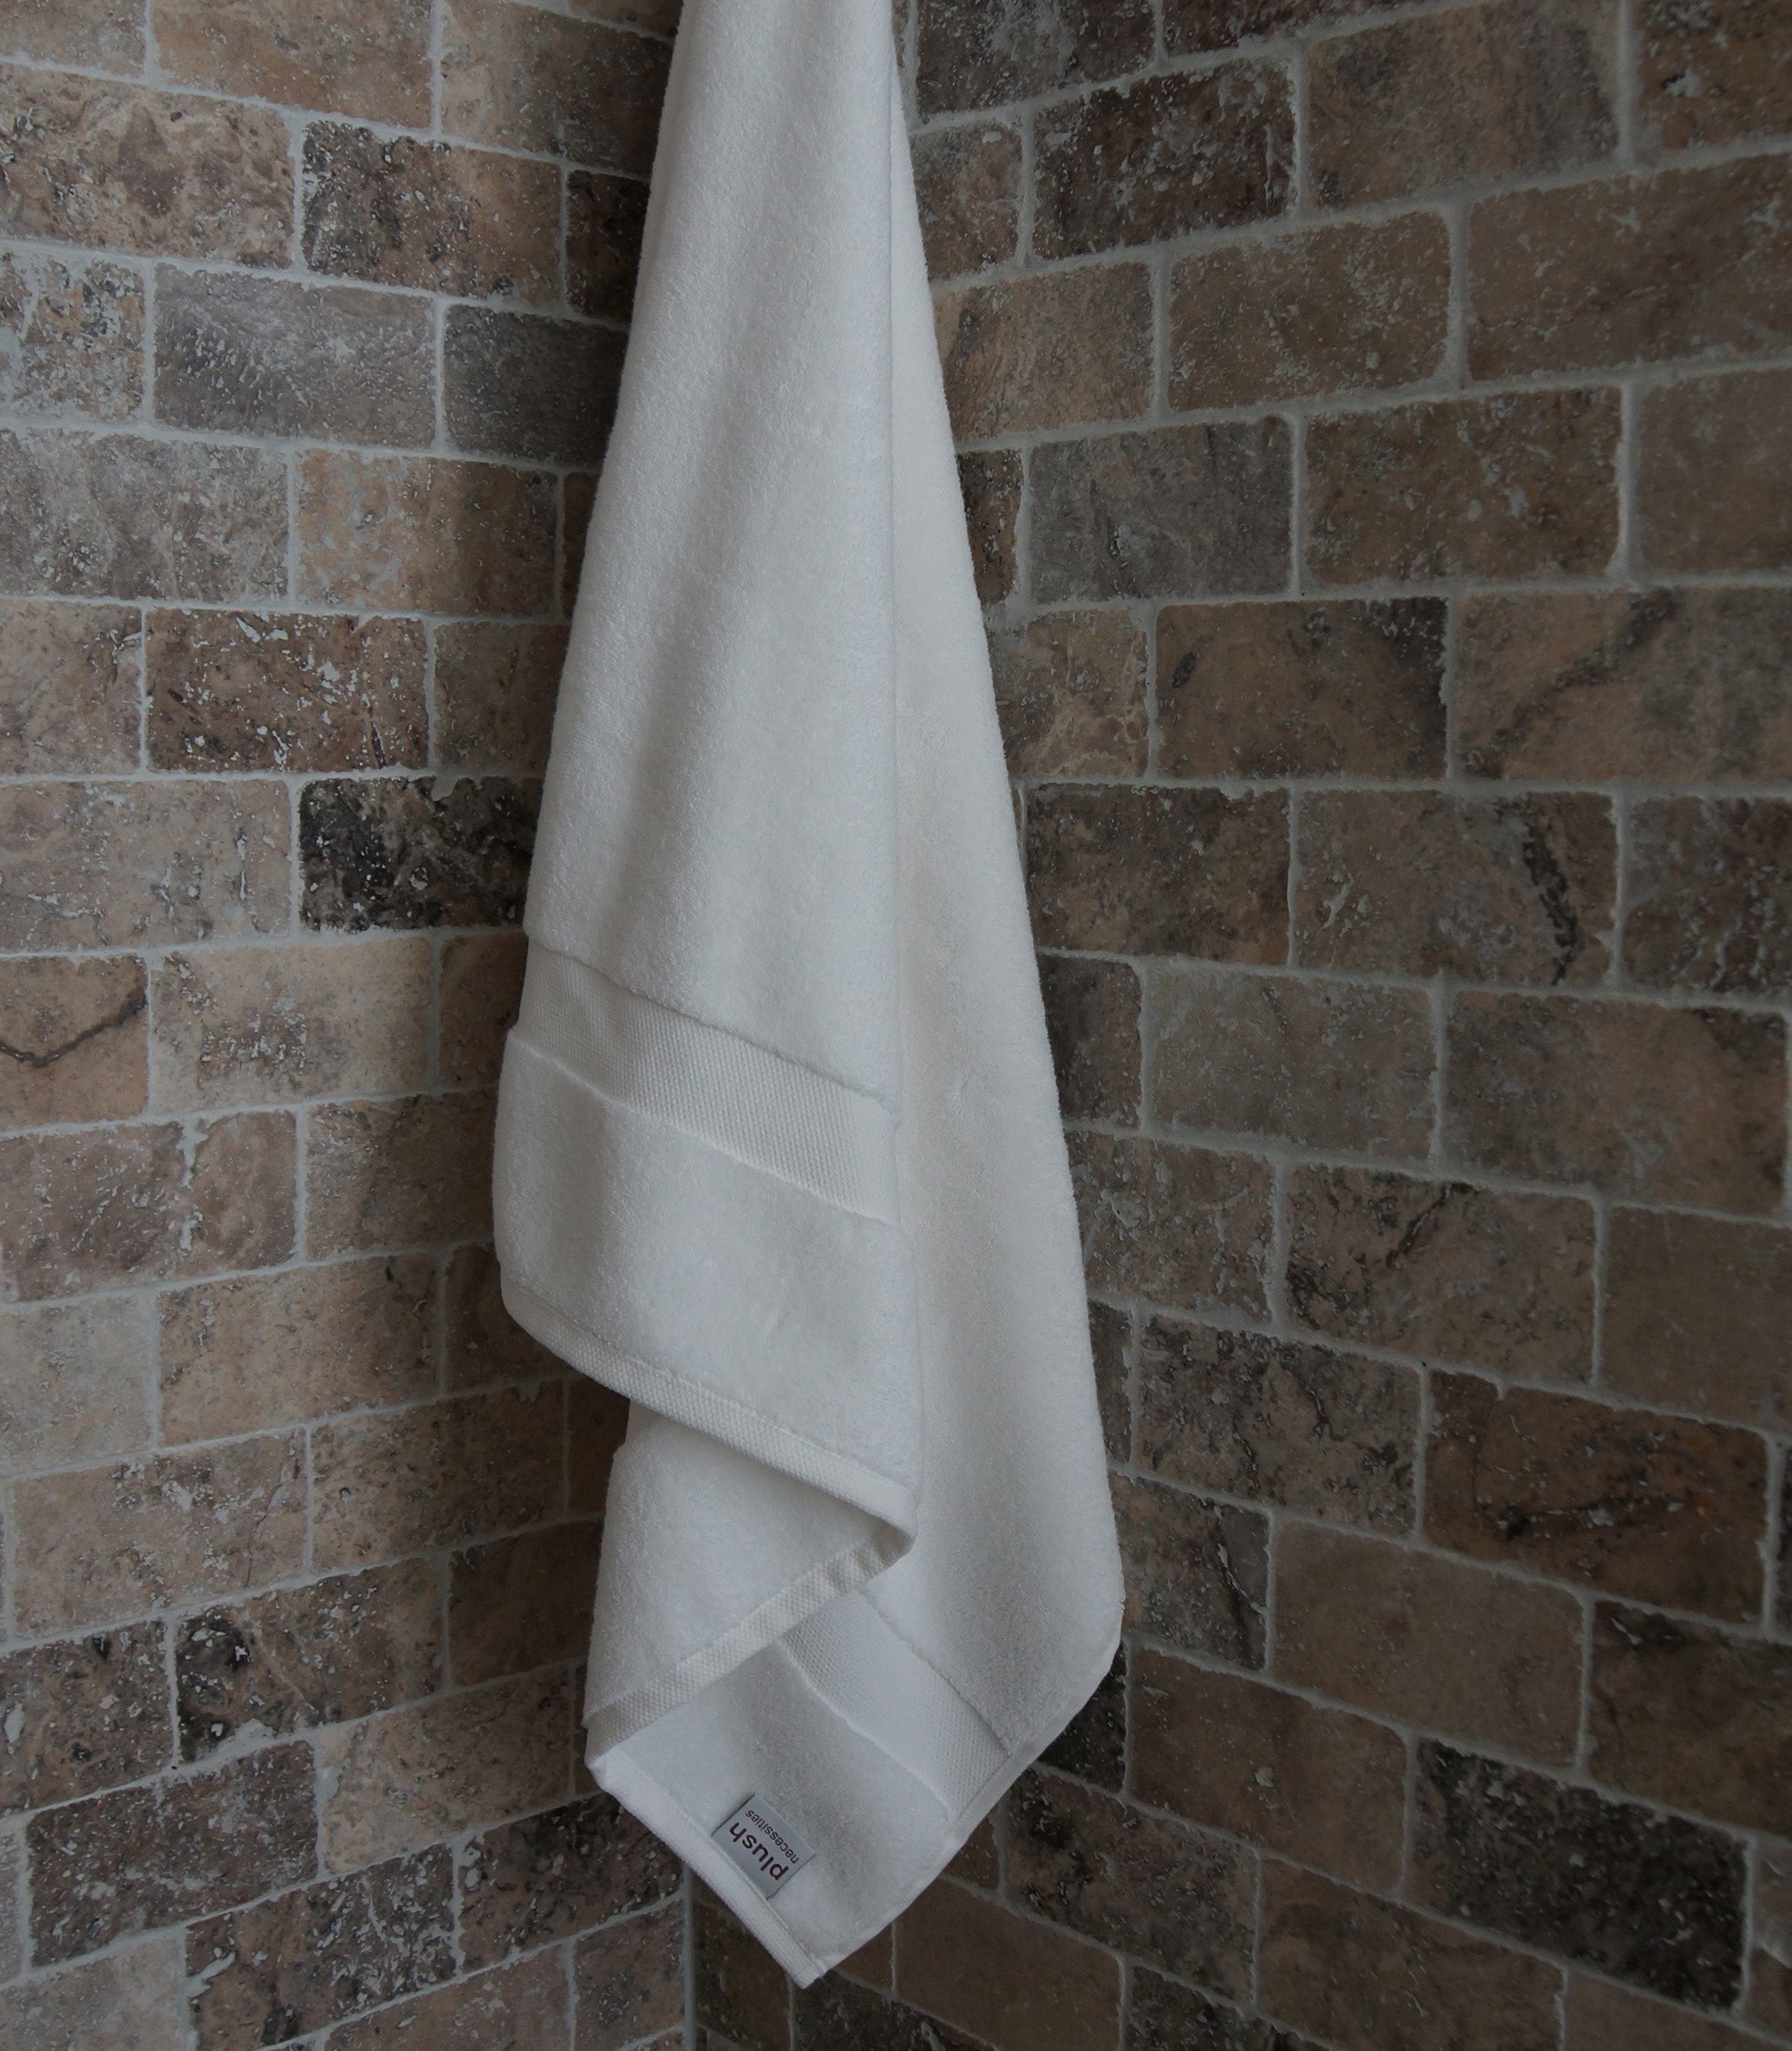 Plush Bath Towel Hanging in Shower